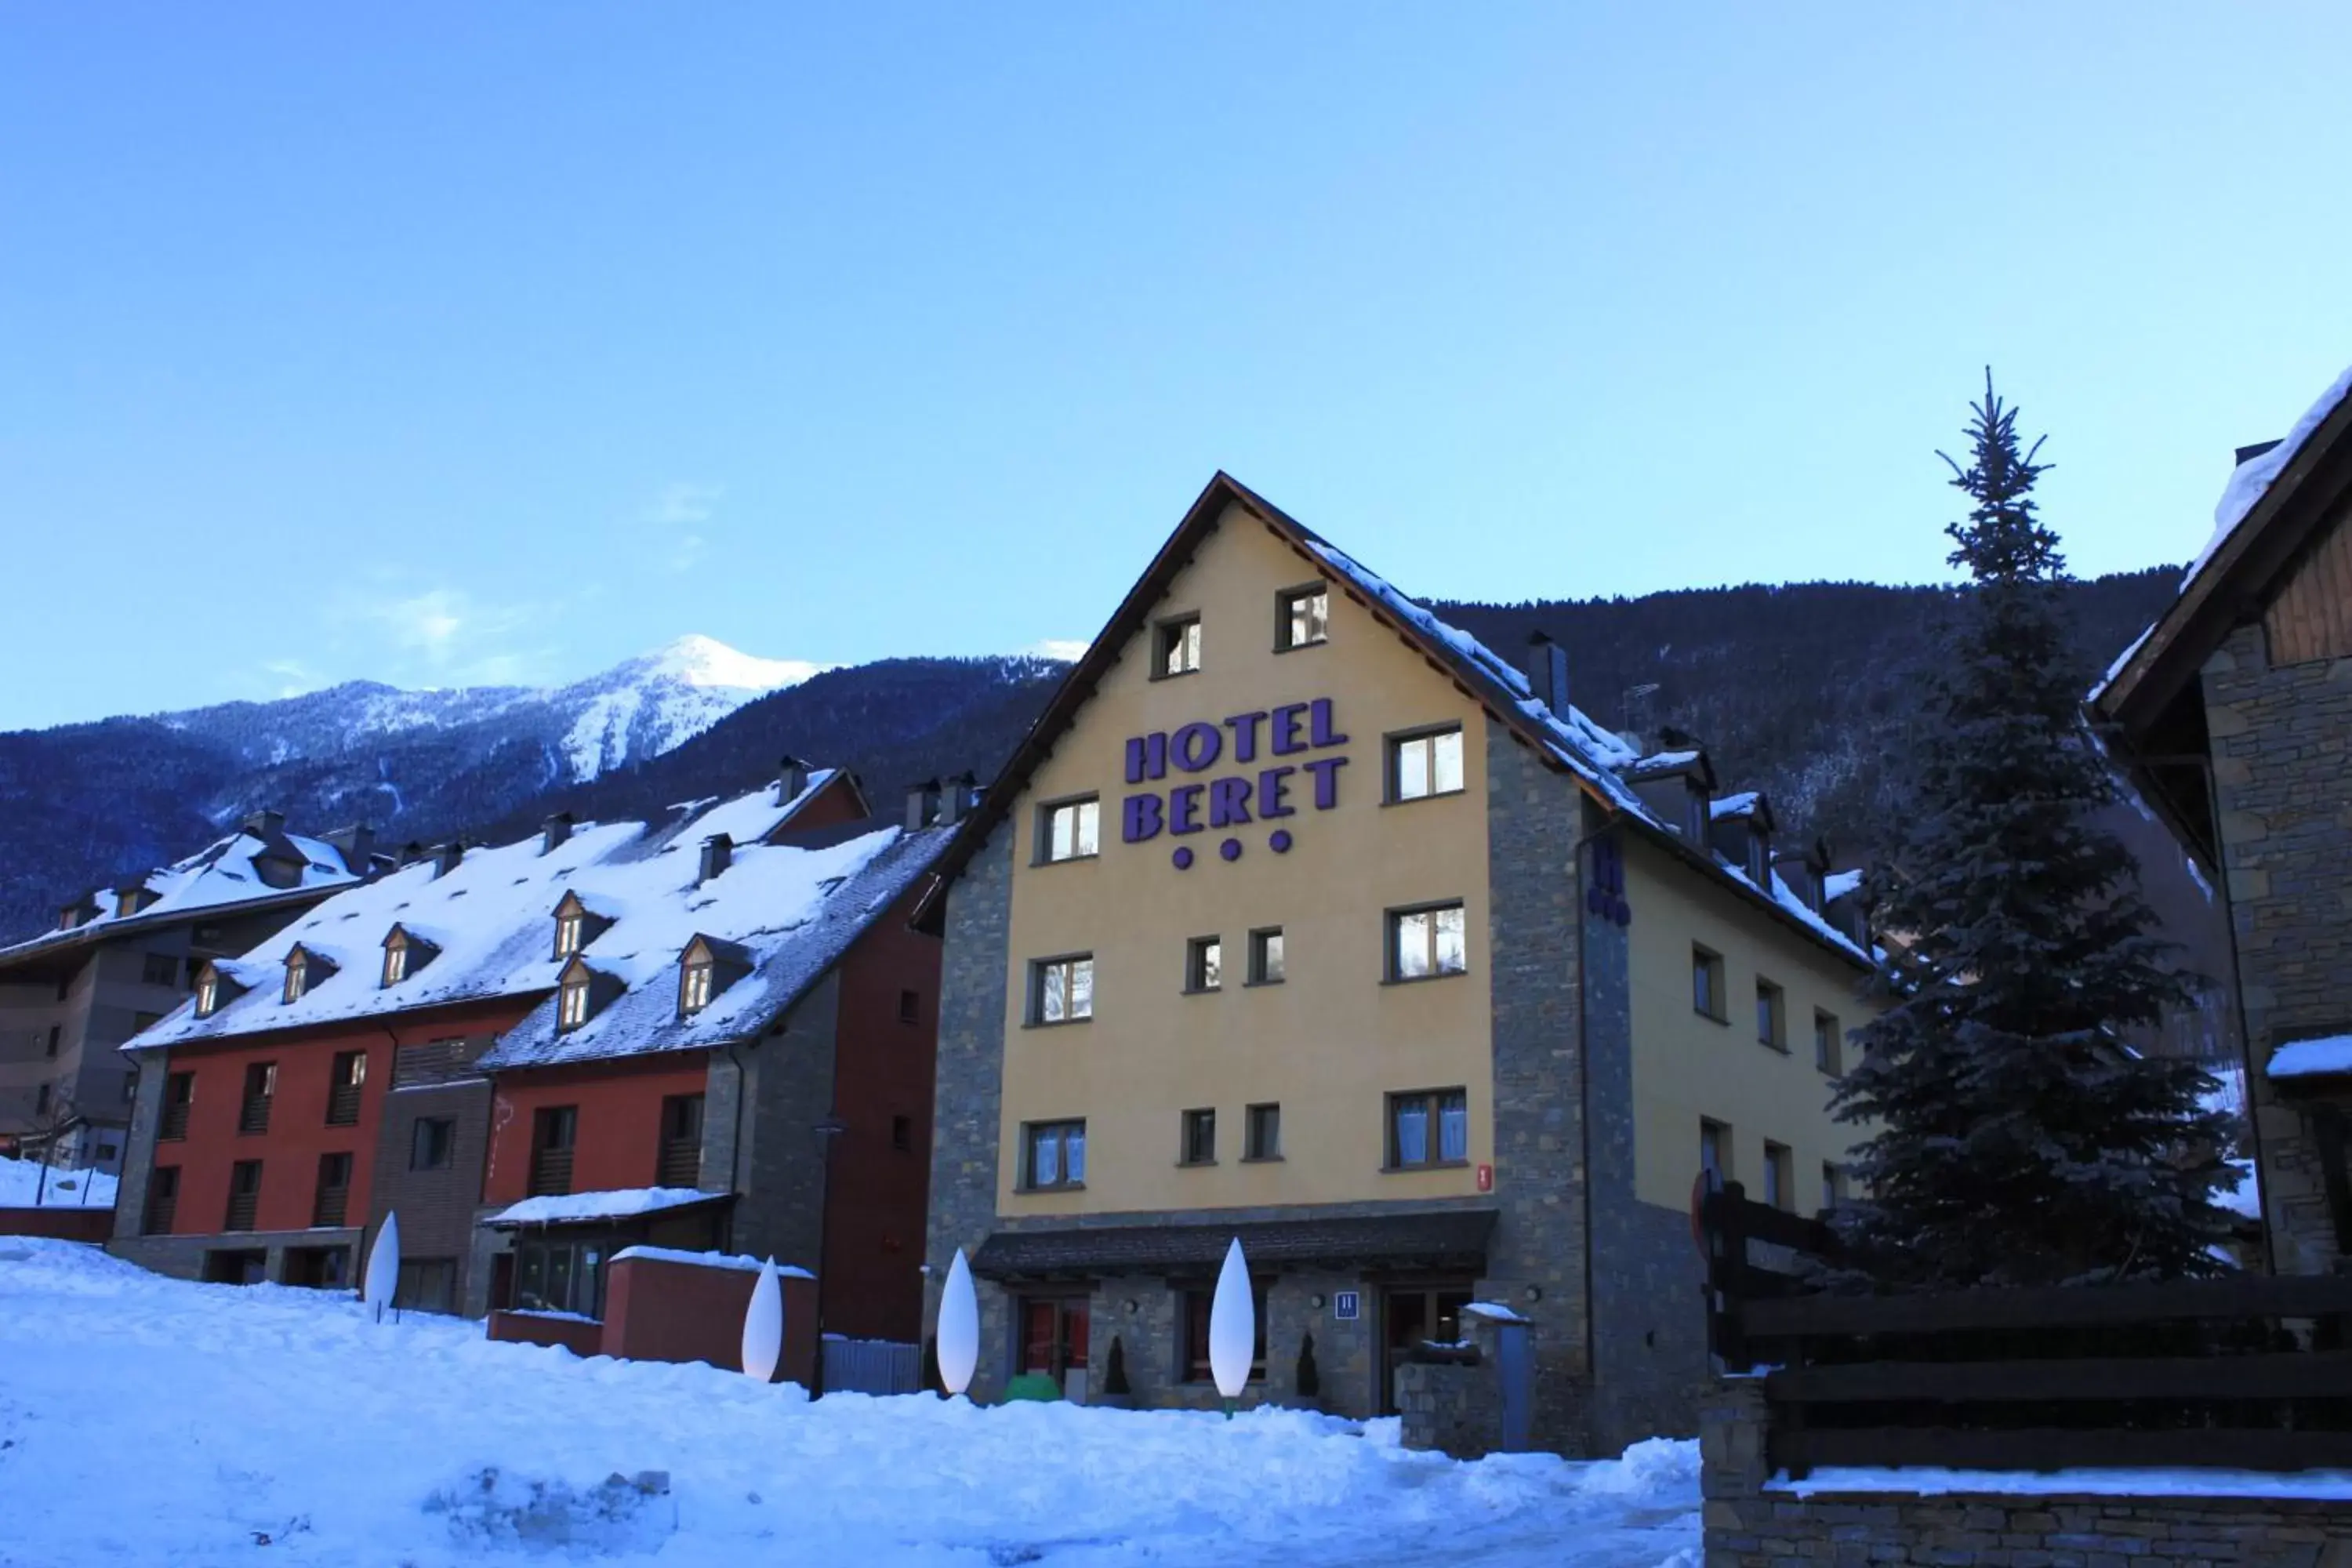 Off site, Winter in Hotel AA Beret